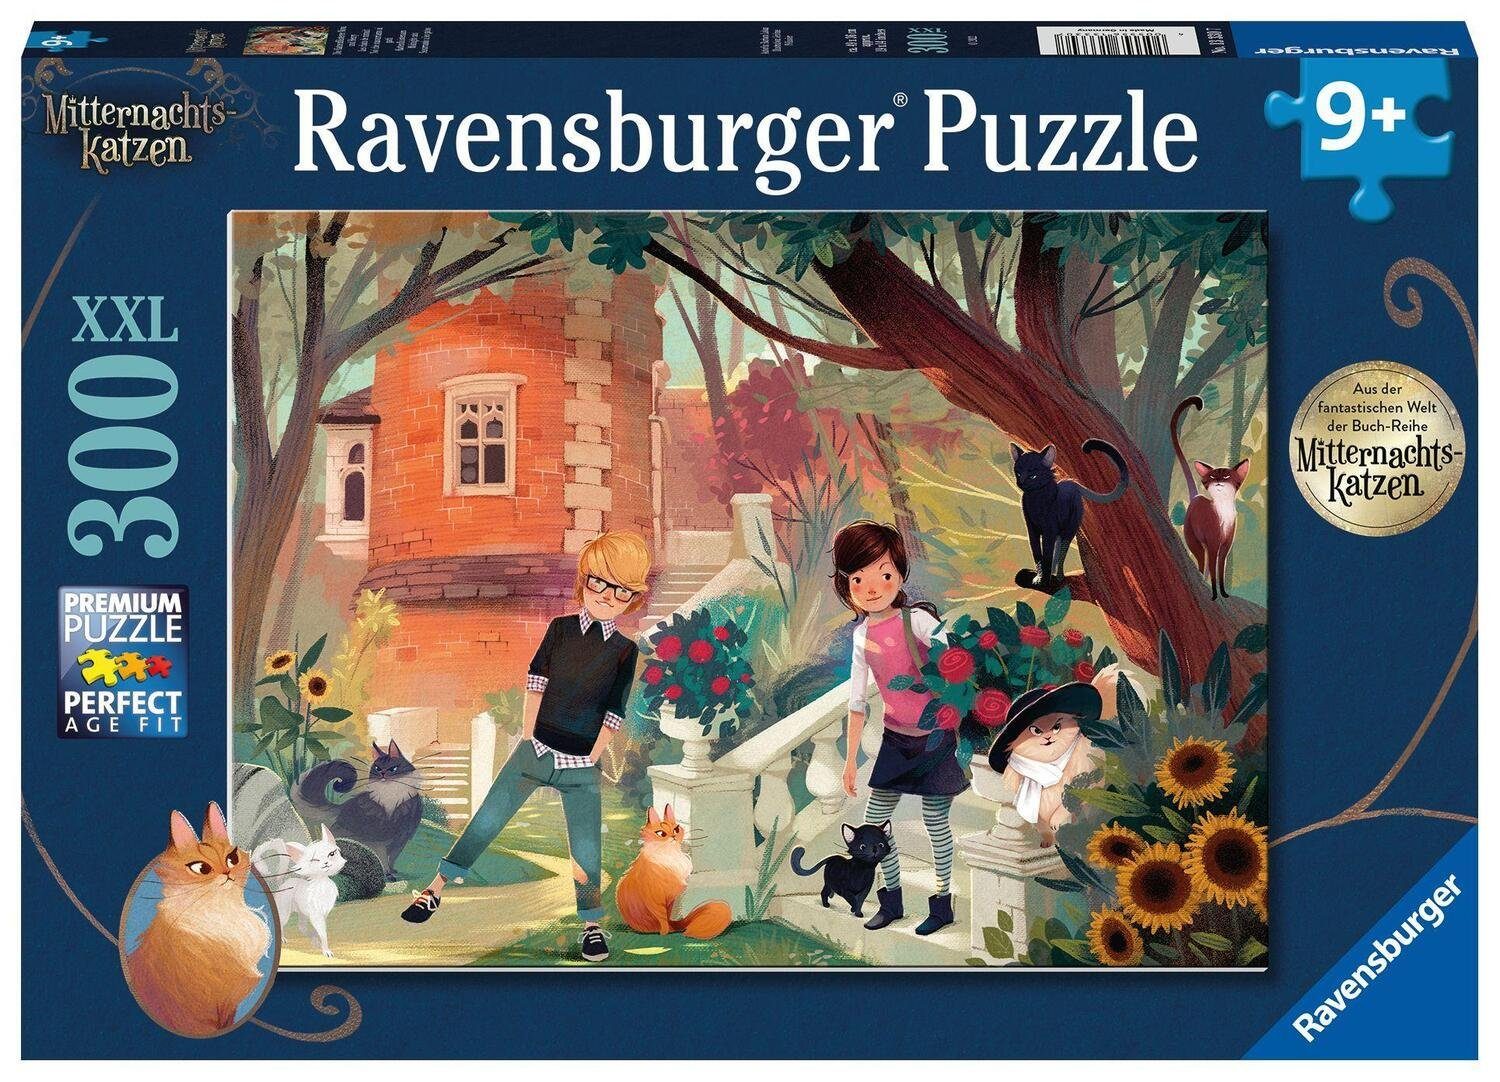 Ravensburger Puzzle Ravensburger Kinderpuzzle 13330 - Die Katzenflüsterer  Nova und..., 300 Puzzleteile, EAN/ISBN: 4005556133307